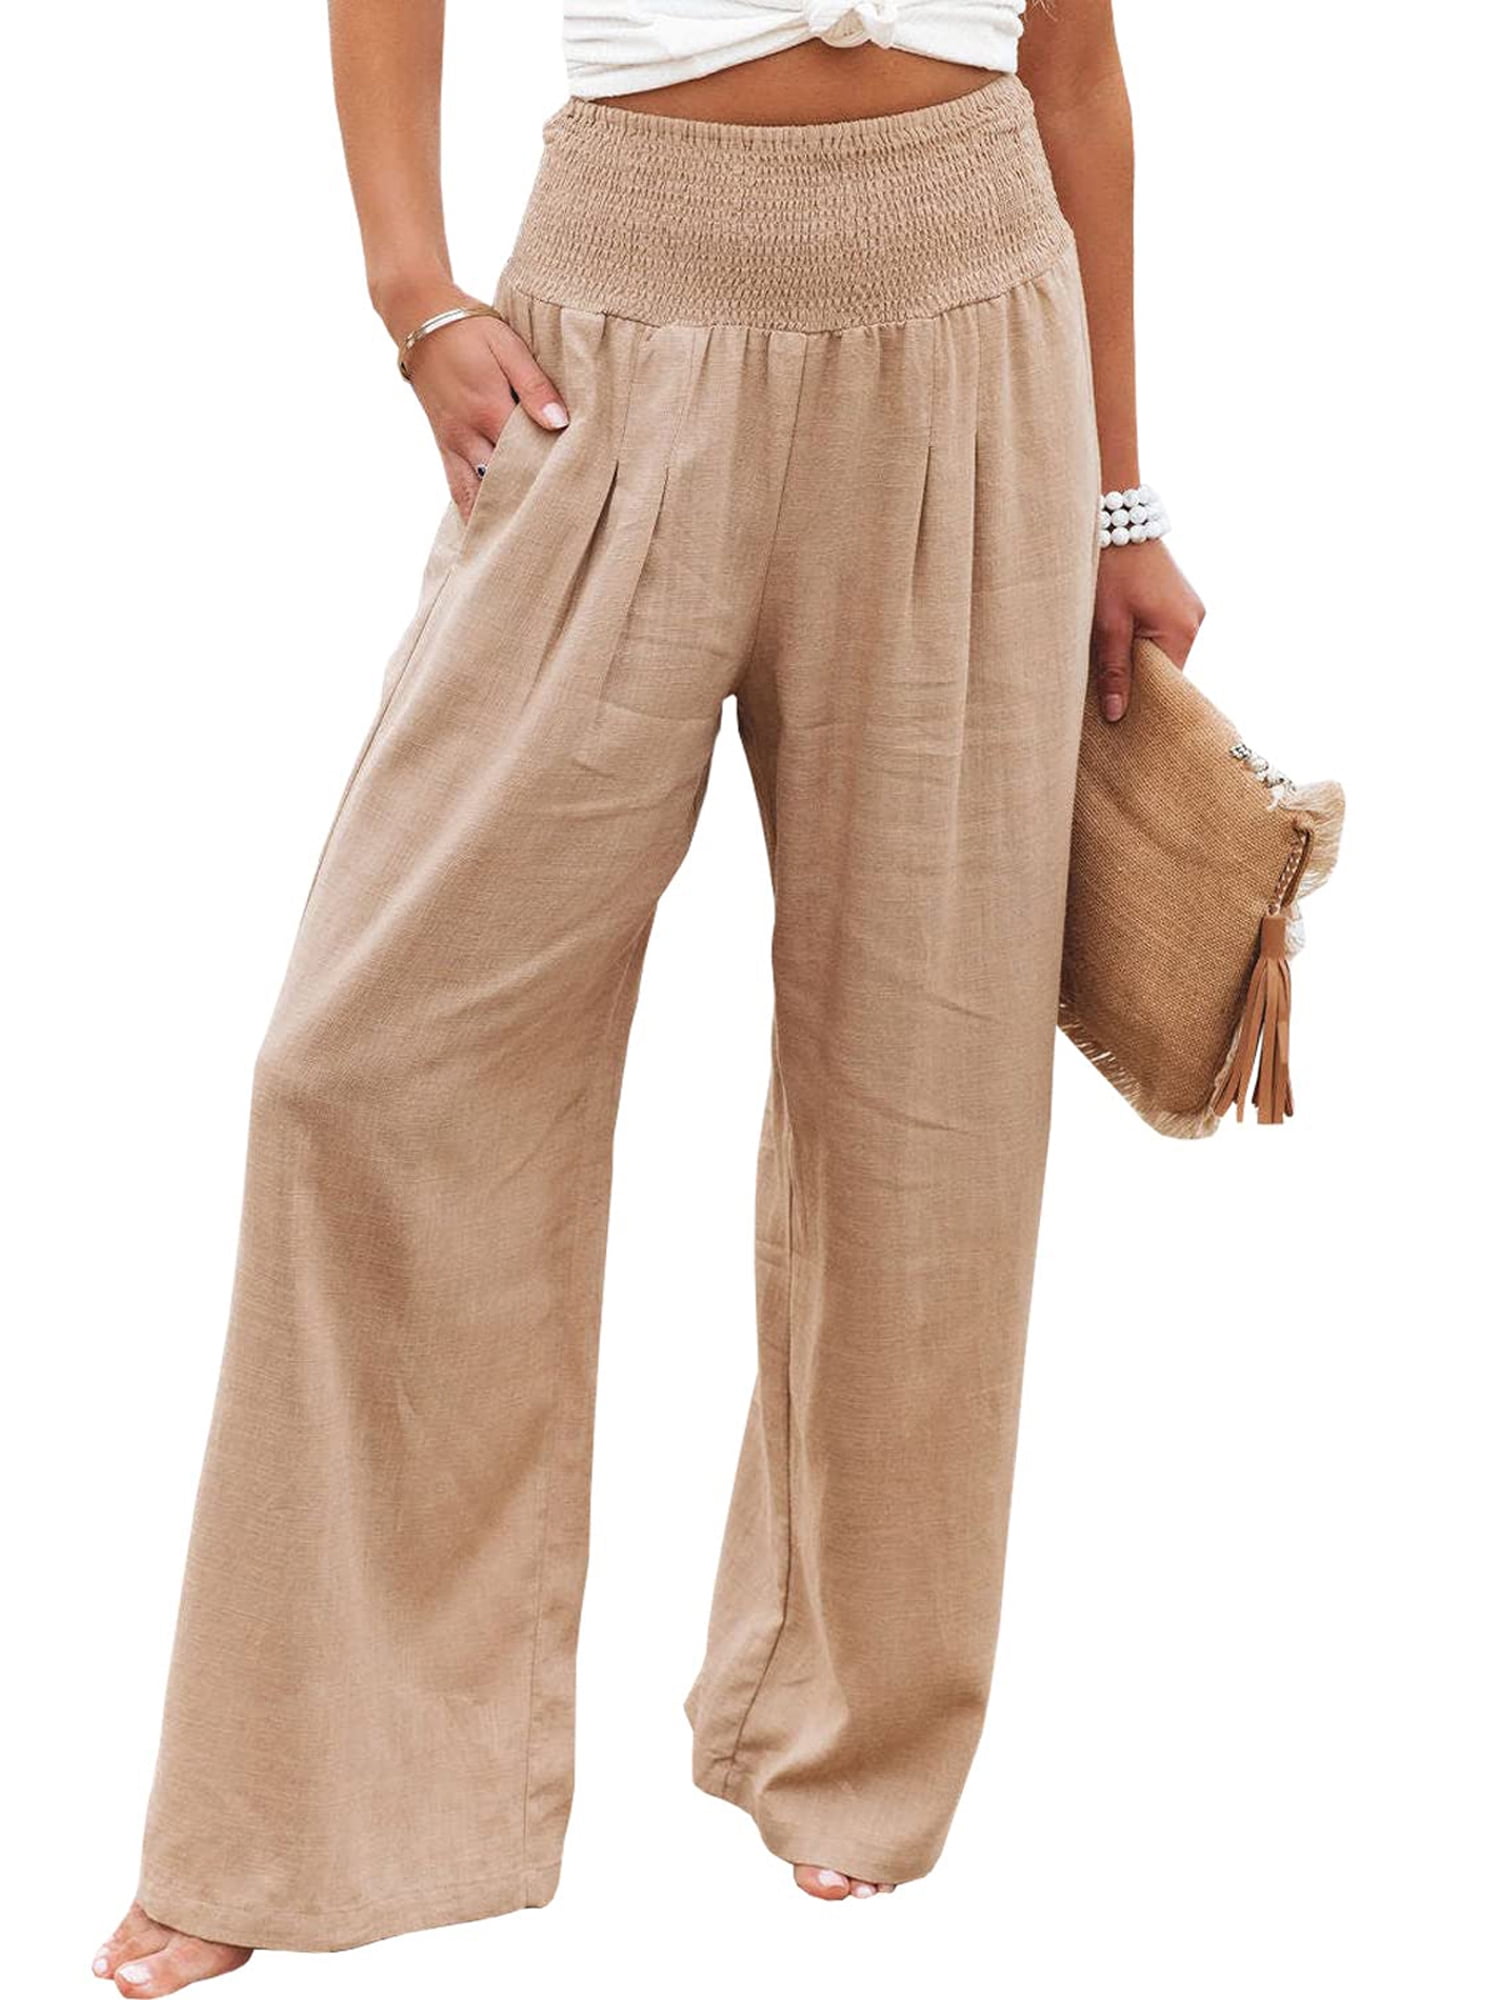 Dilgul Women's Crop Linen Pants Drawstring Elastic Waist Pants Casual Loose Fit Comfy Lounge Pants with Pockets 